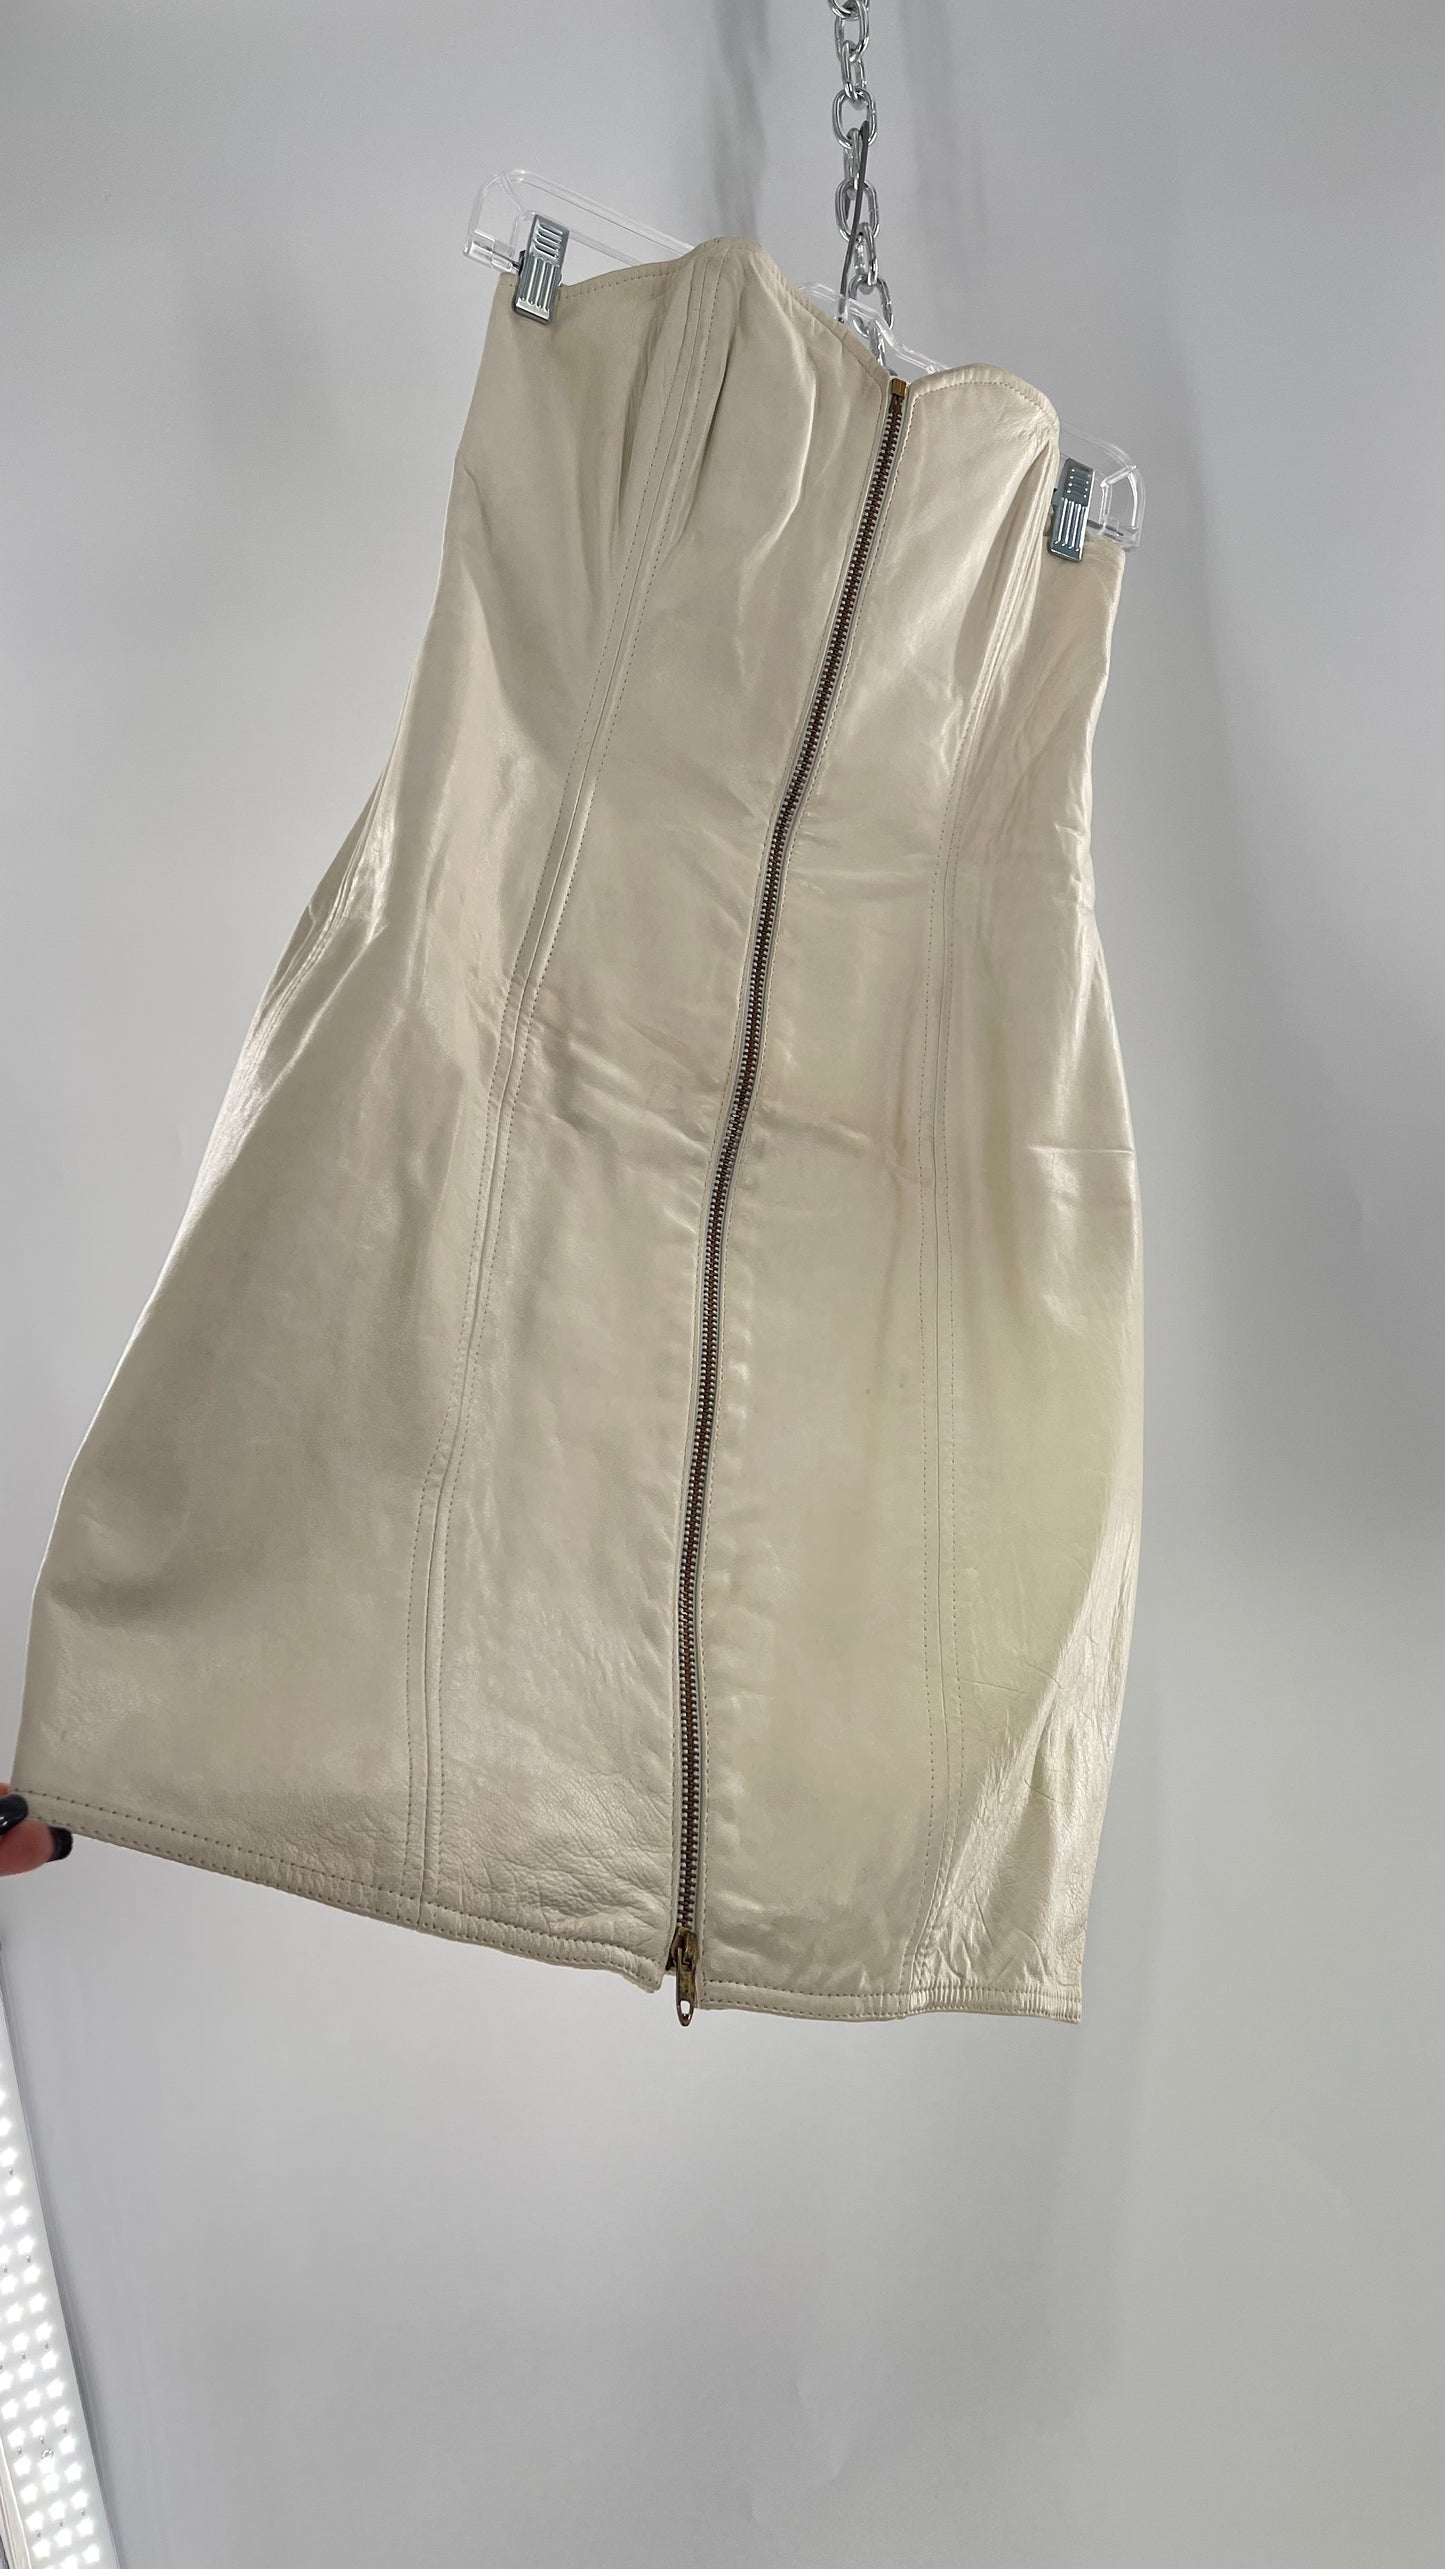 Vintage White Leather Zip Front Mini Dress *Handmade* (Size Small/Medium)